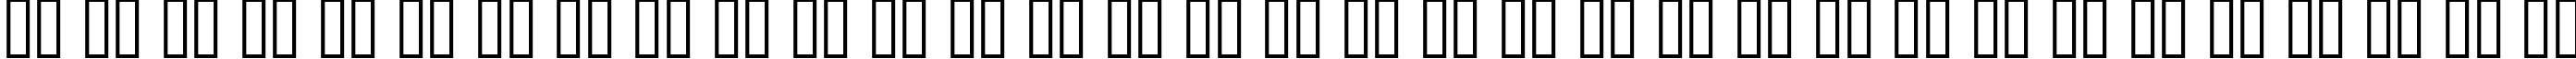 Пример написания русского алфавита шрифтом EuroComic